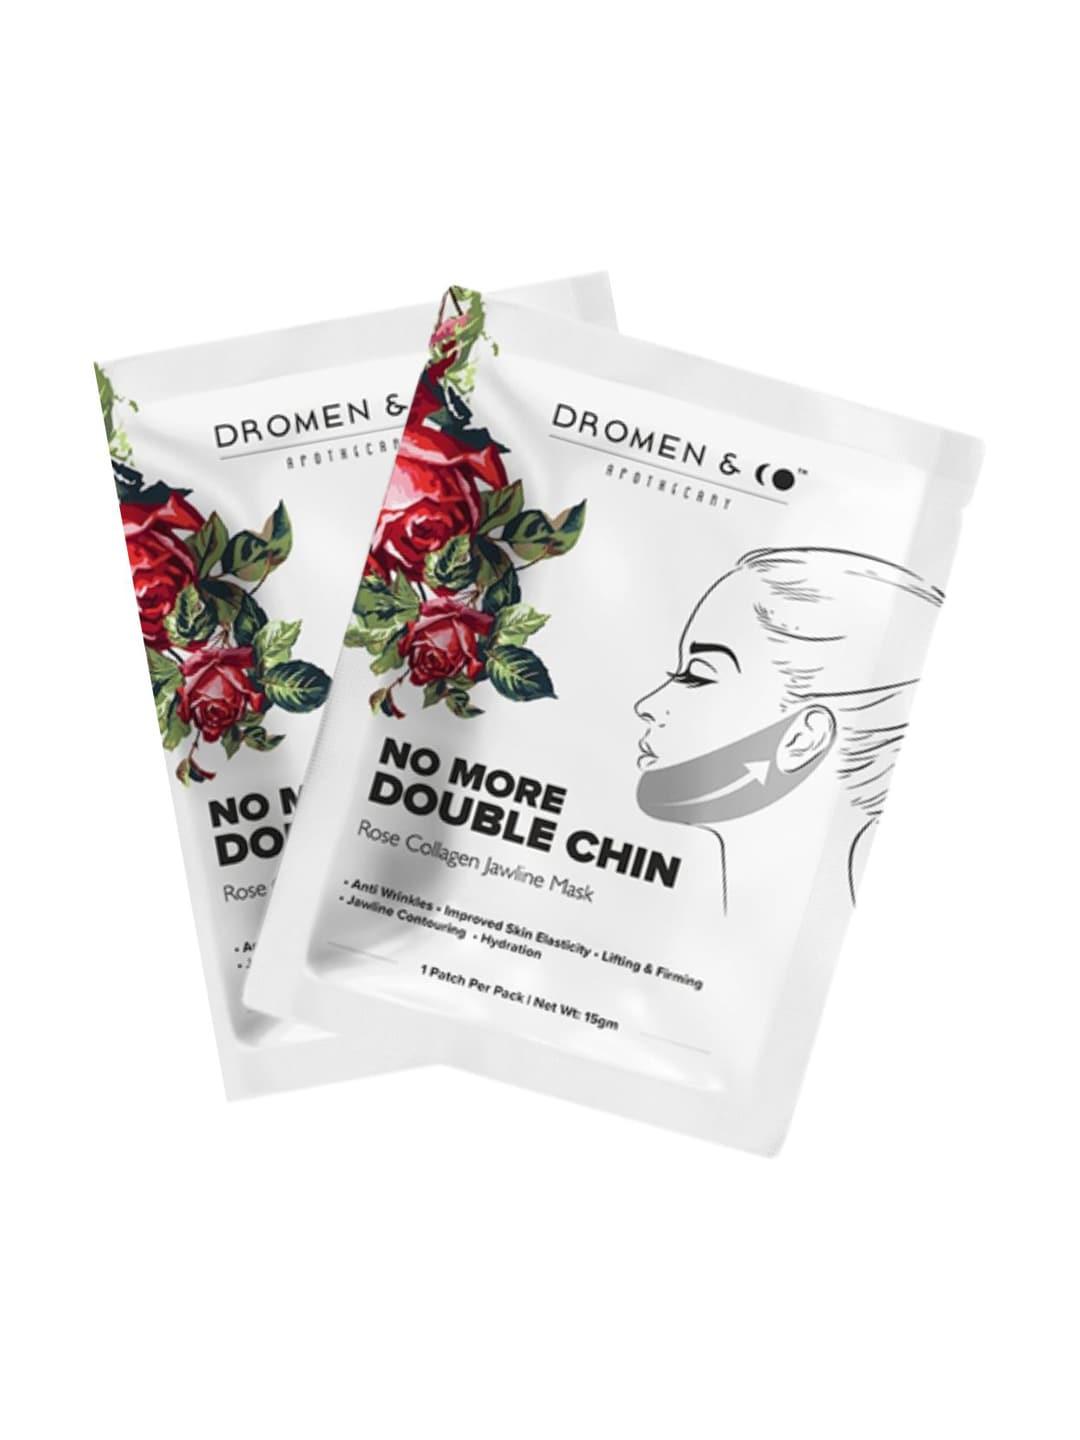 dromen & co set of 2 rose collagen v-shaped jawline slimming mask for double chin-15g each